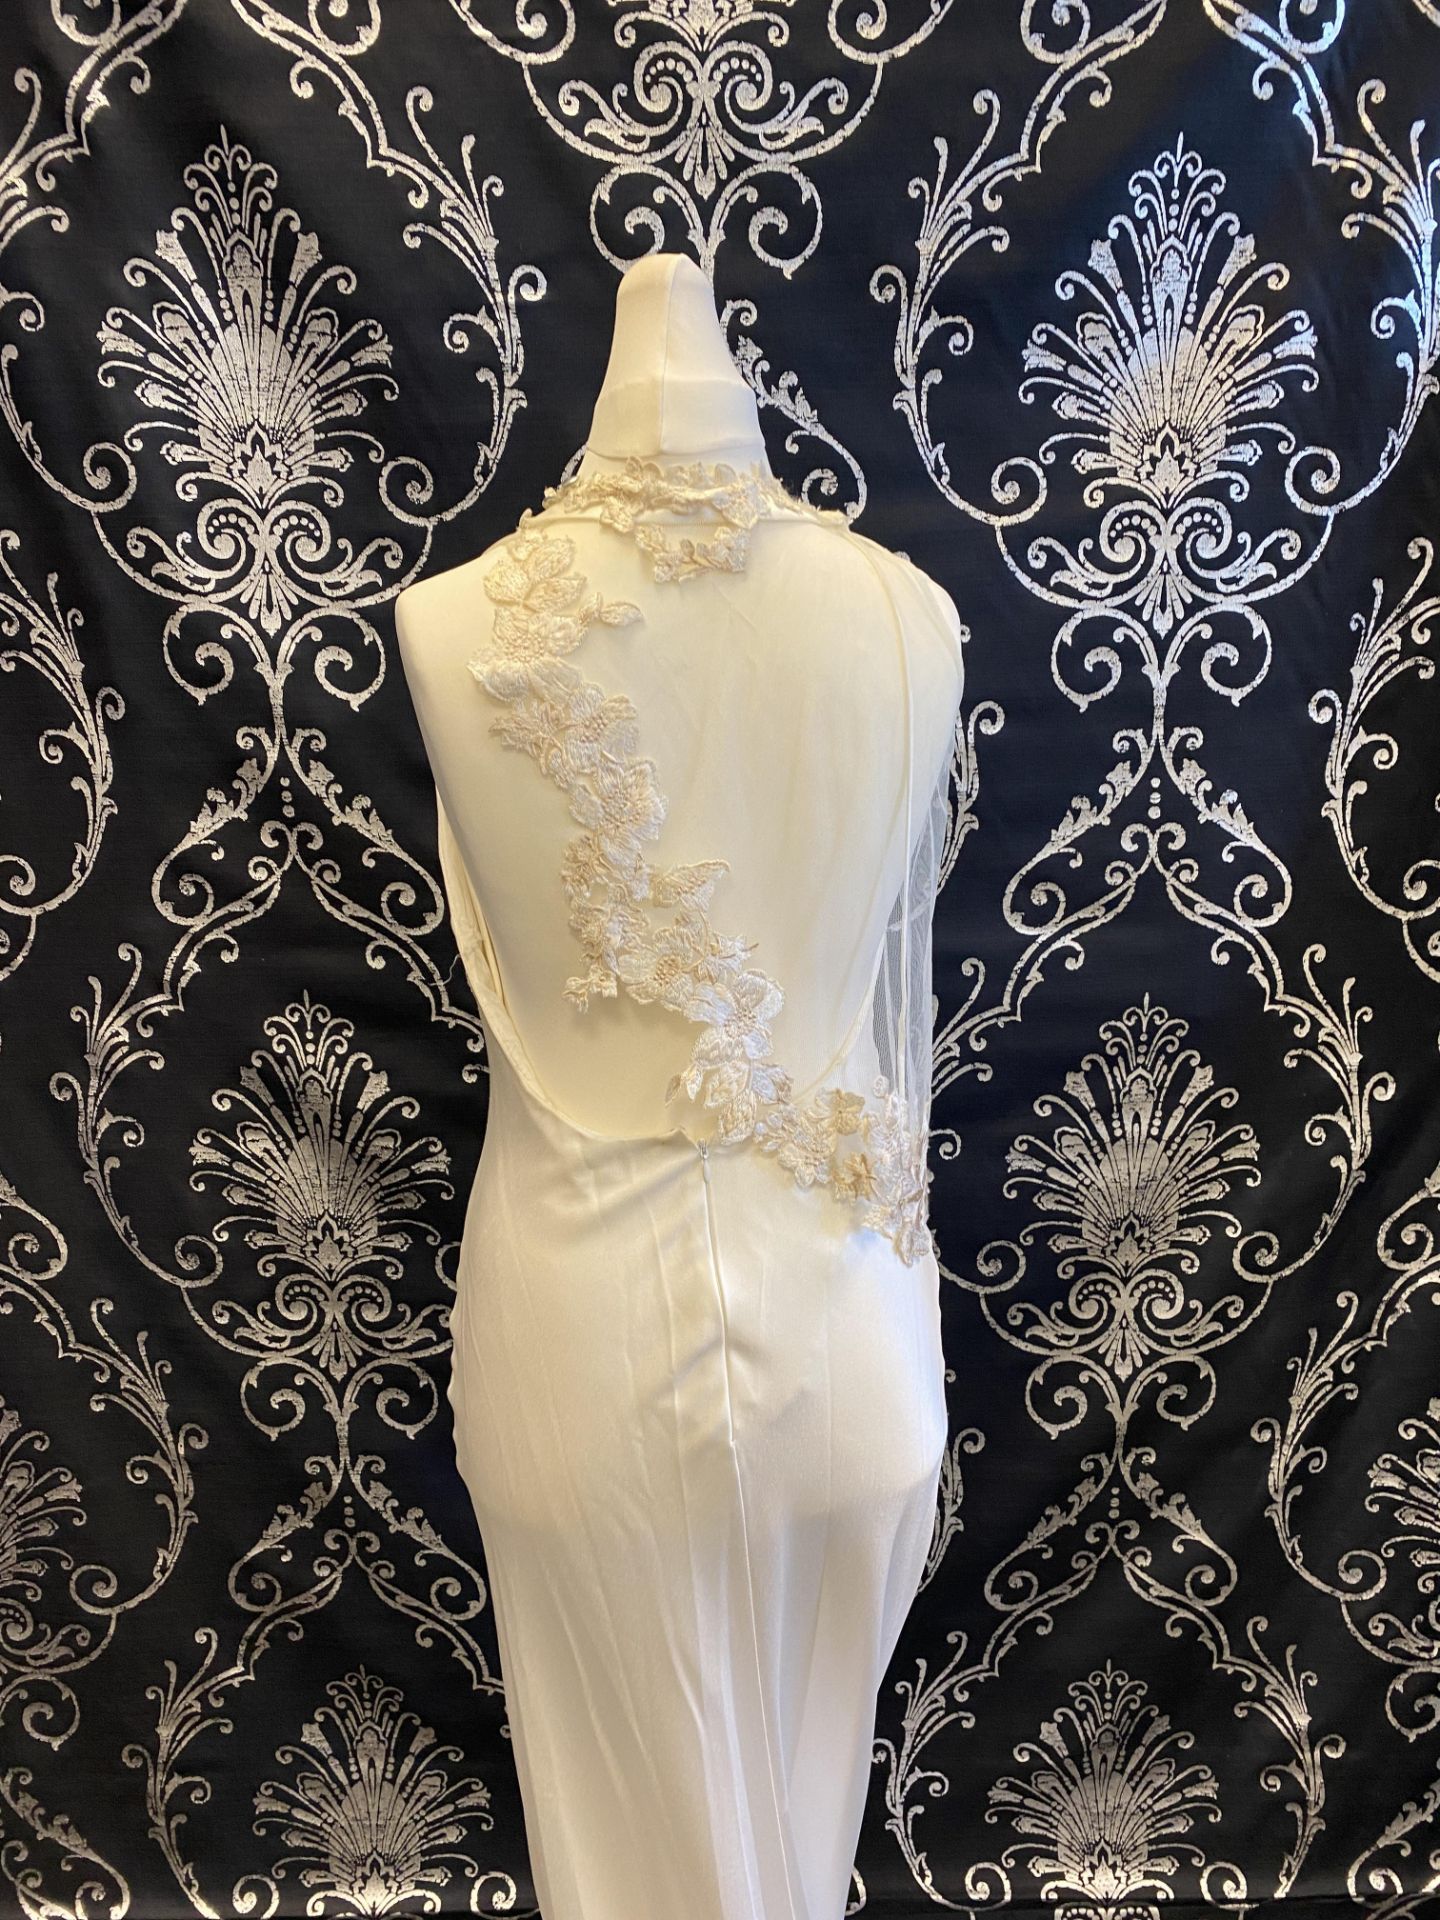 1 x DAVID FIELDEN '8813' Elegant High Neck Biased Cut Designer Wedding Dress RRP £2,440 UK14 - Image 9 of 11